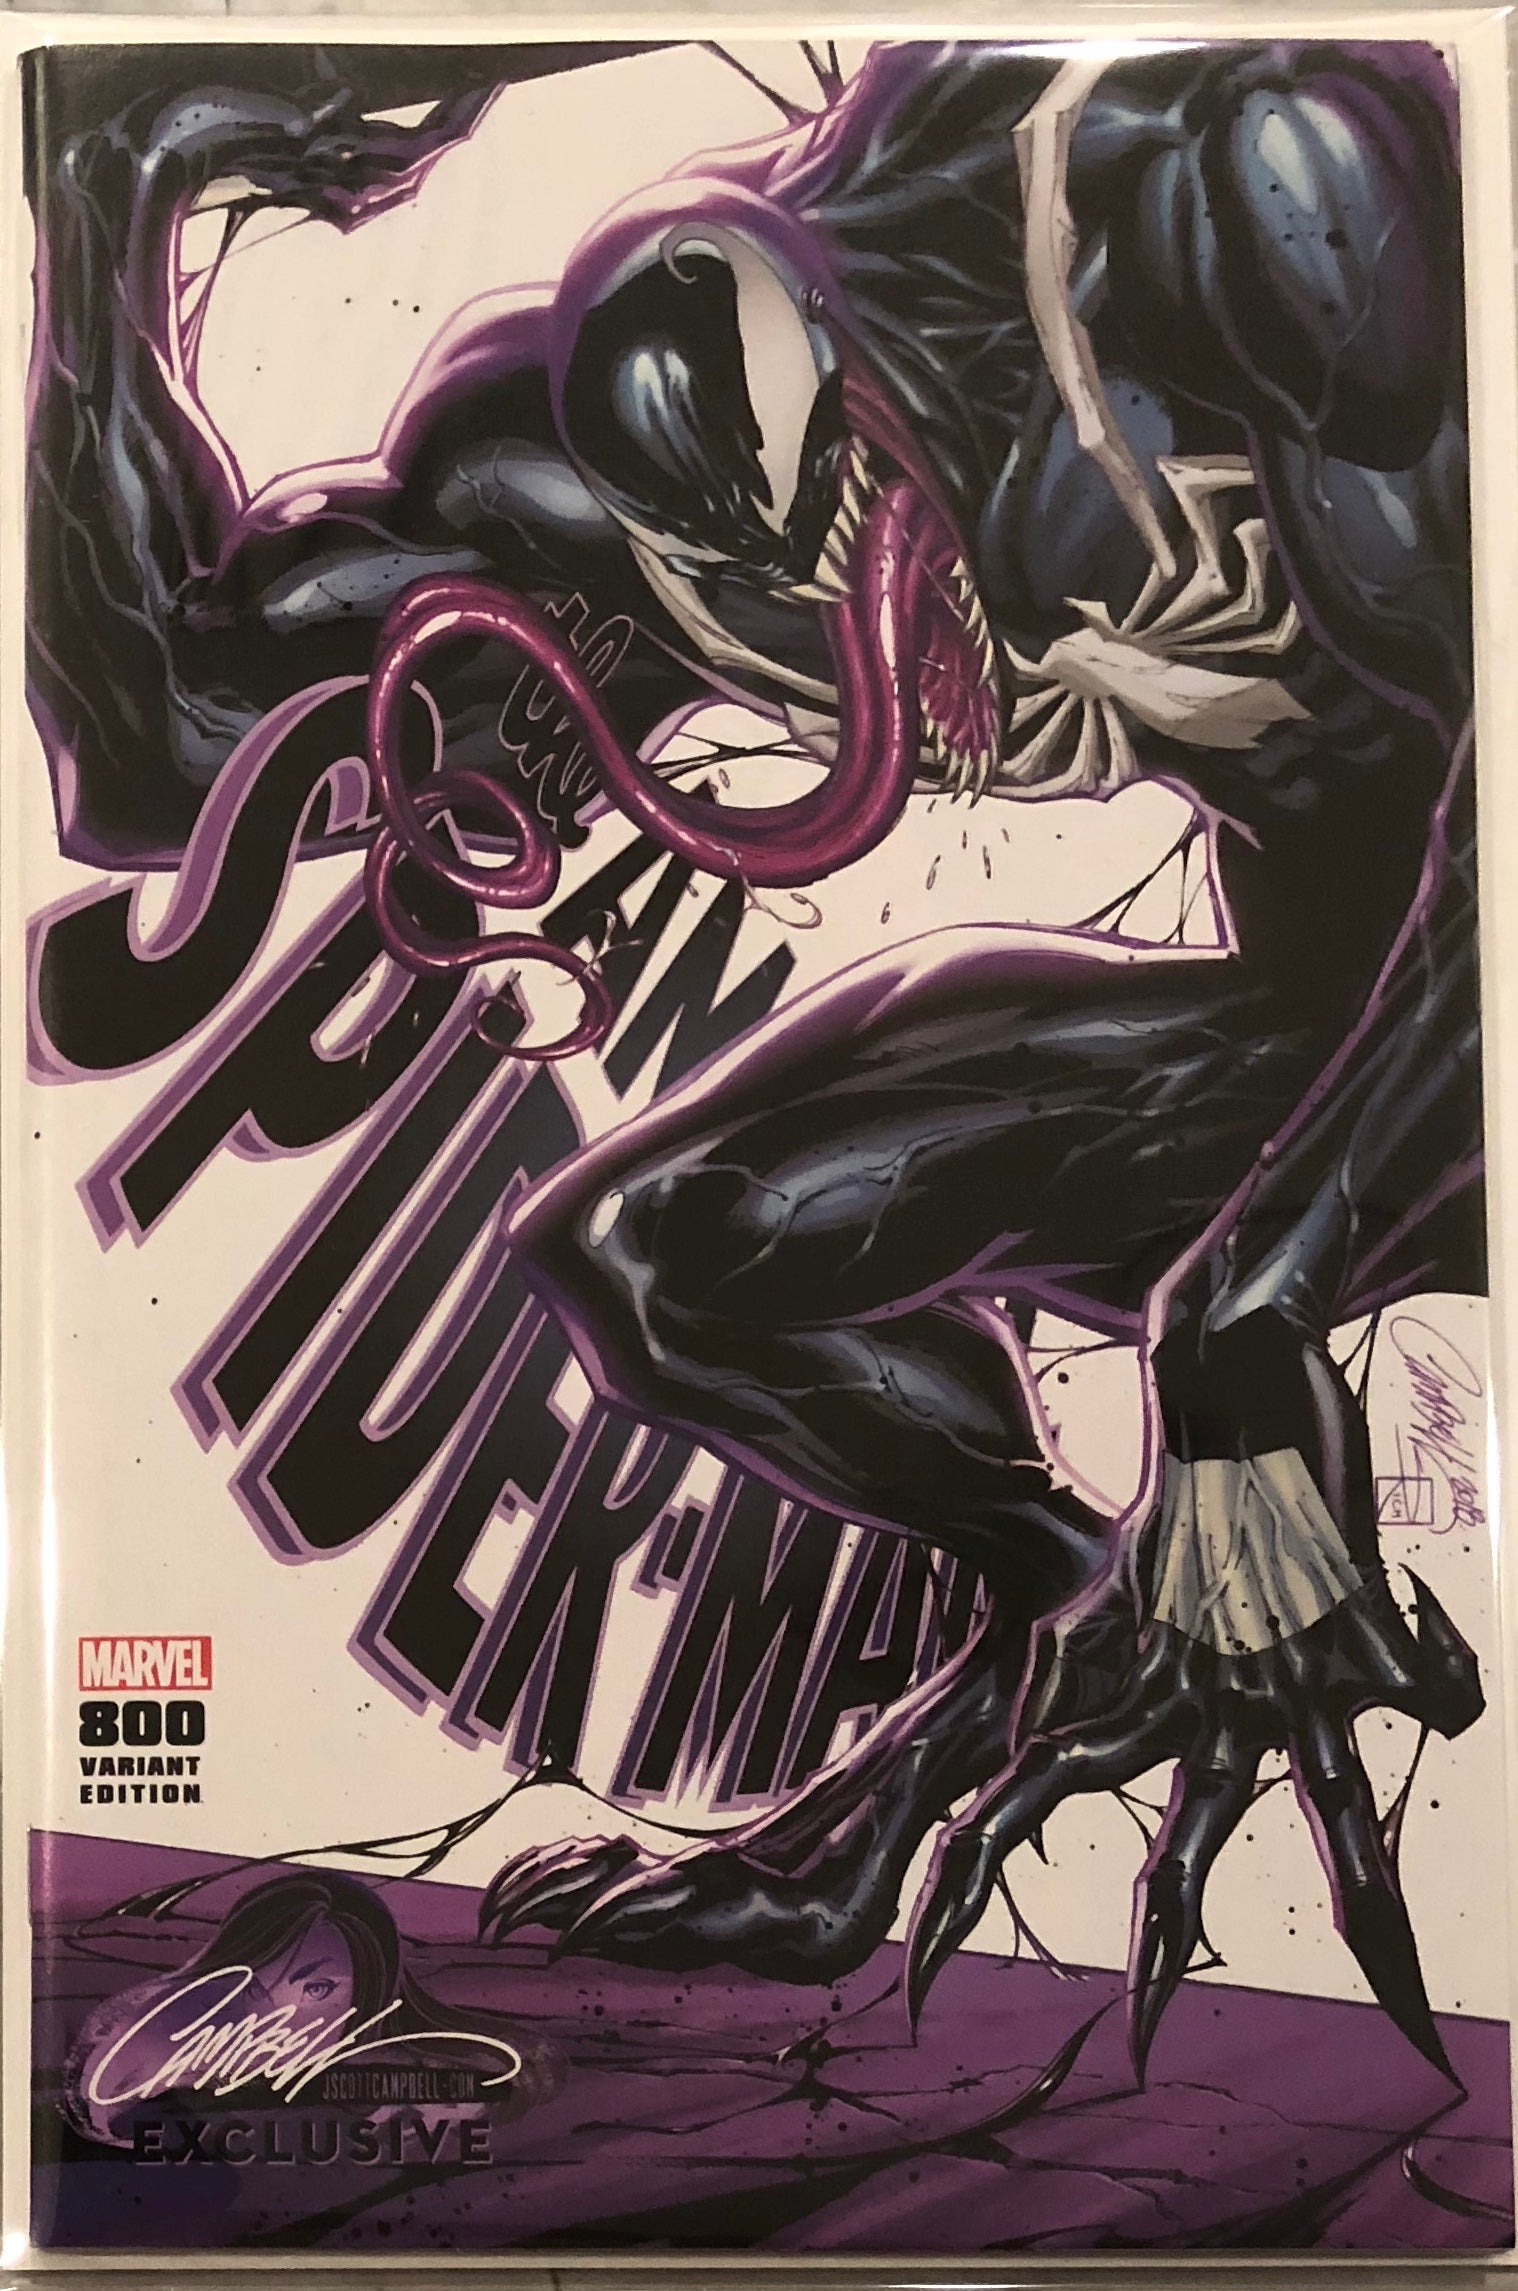 Amazing Spider-Man #800 J. Scott Campbell Edition D "Venom" Exclusive